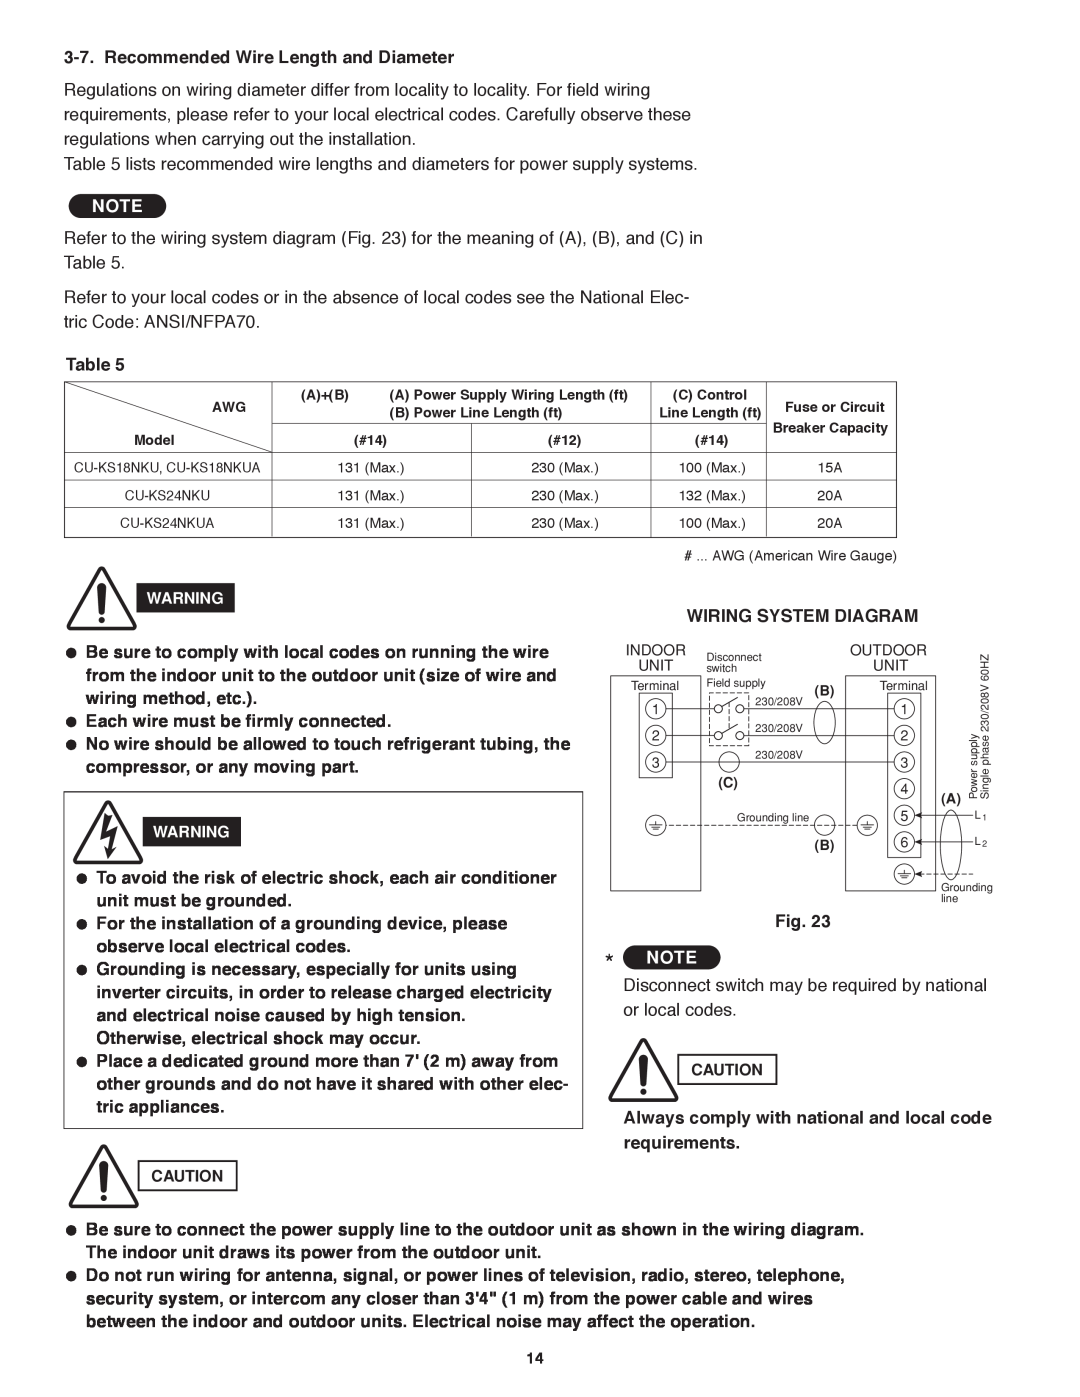 Panasonic CS-KS24NKU, CU-KS24NKUA service manual Recommended Wire Length and Diameter 